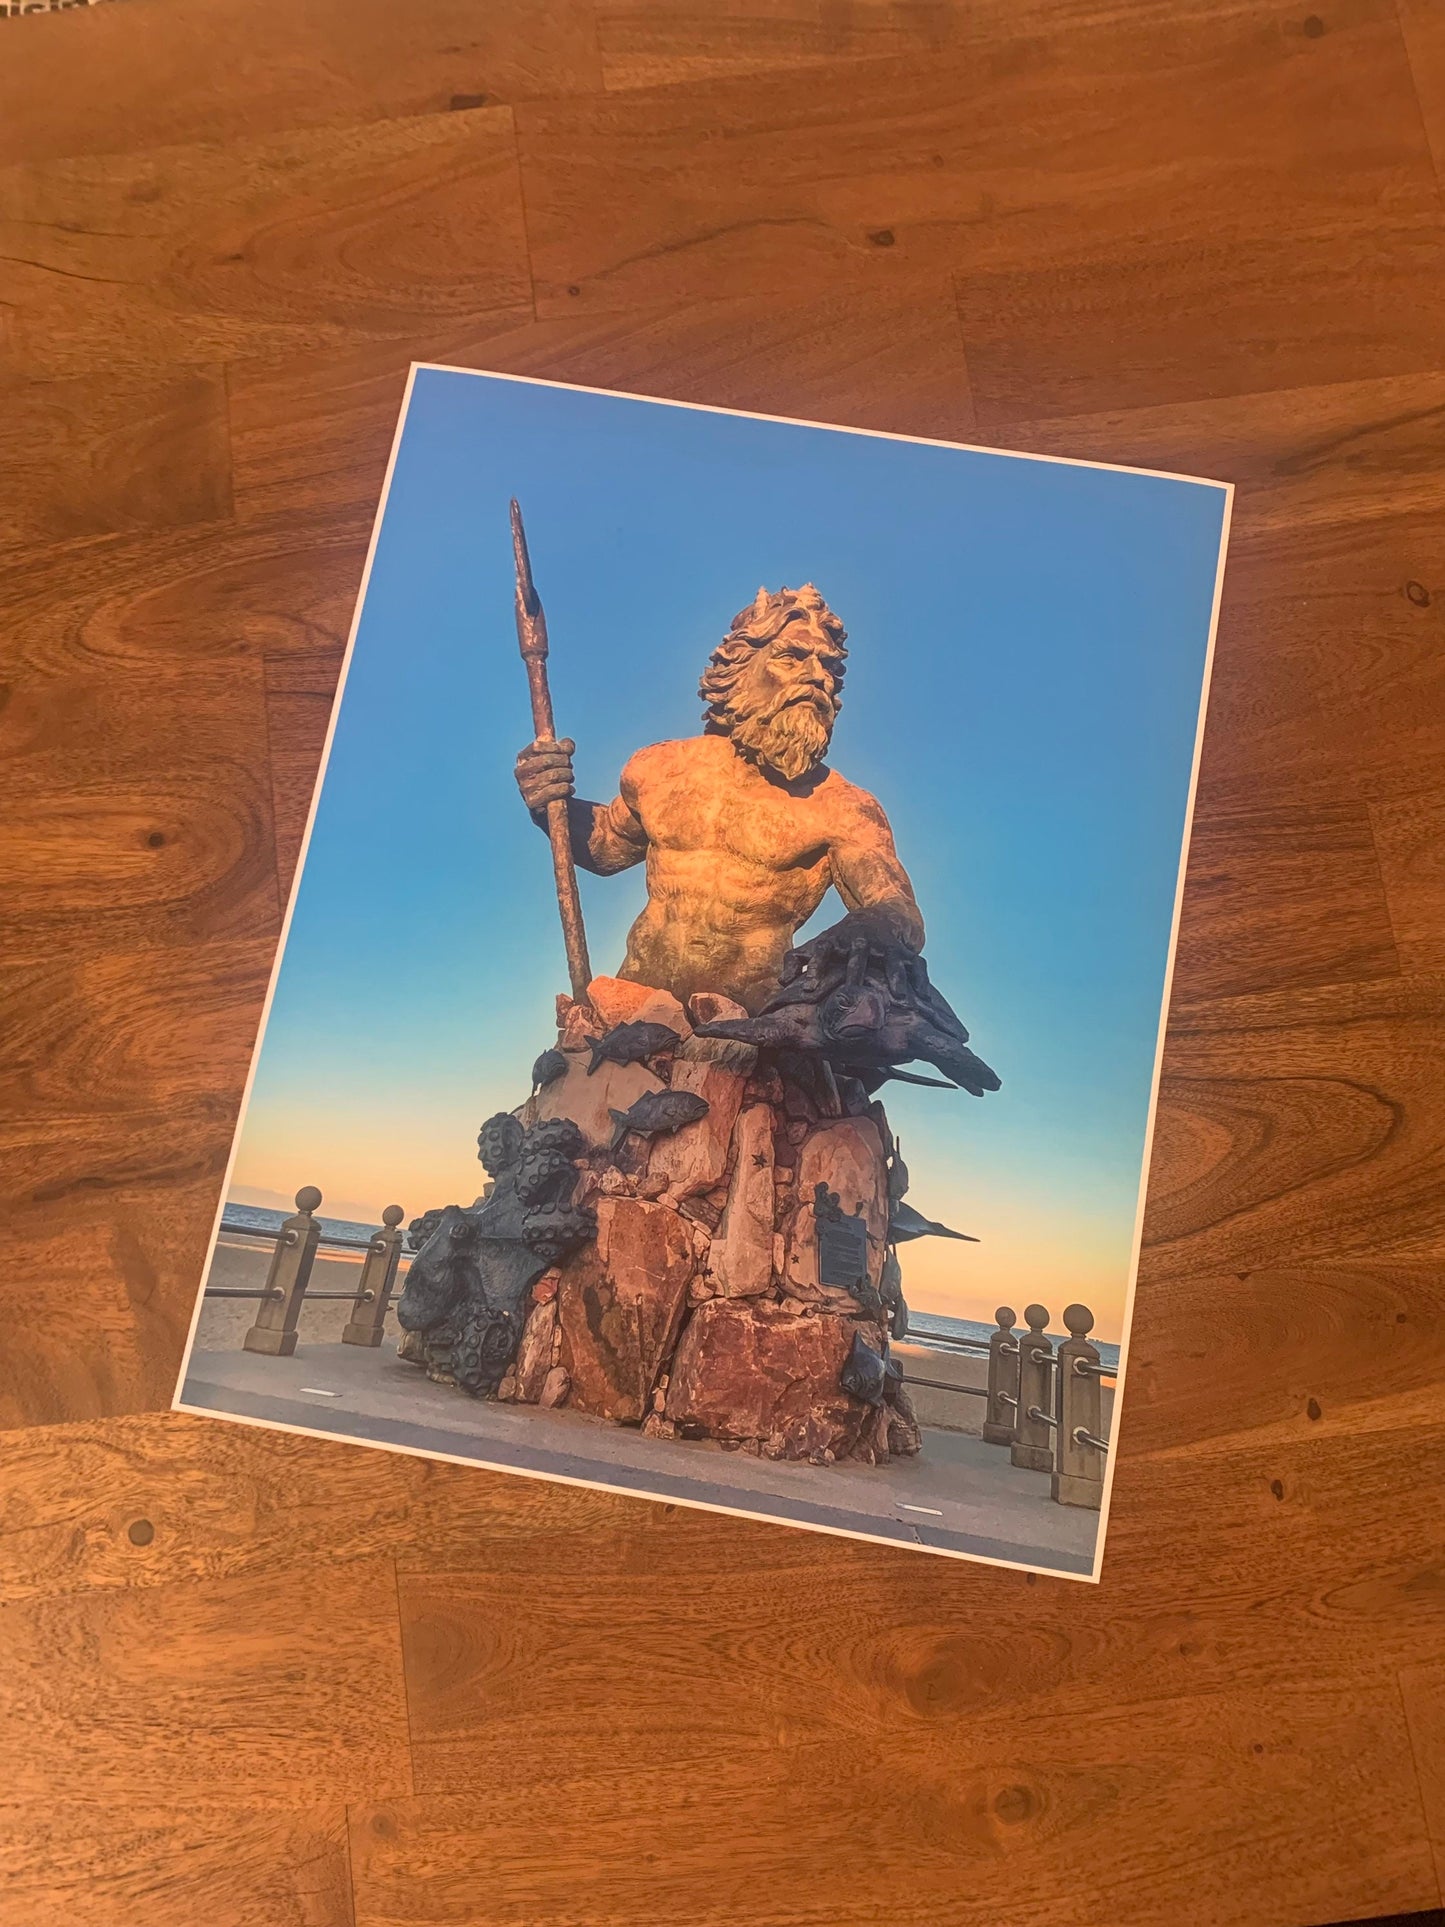 Sunset at the Statue of King Neptune, Virginia Beach, VA Photo Print